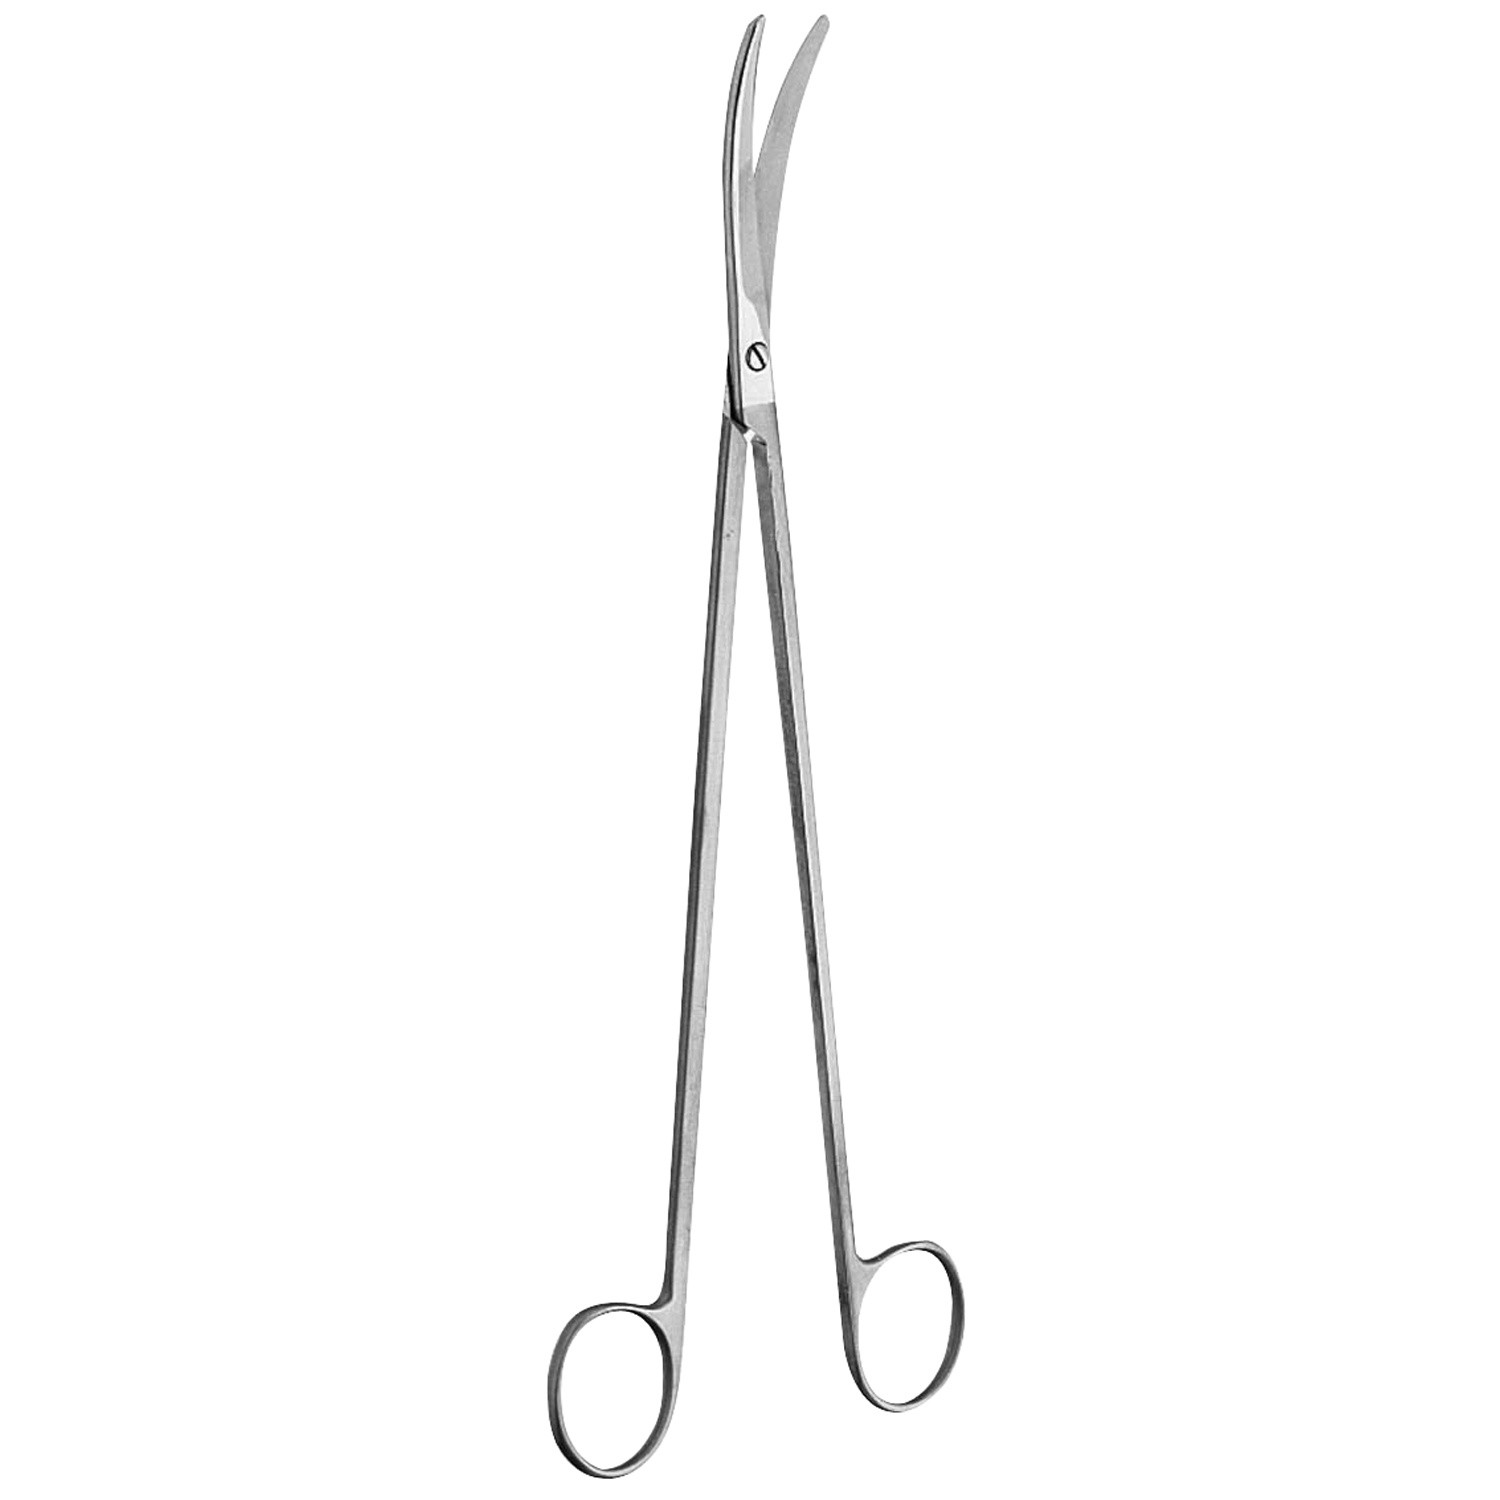 Crafoord Lobectomy Scissors, Blunt Tips, Curved, 12" (30.5 Cm)